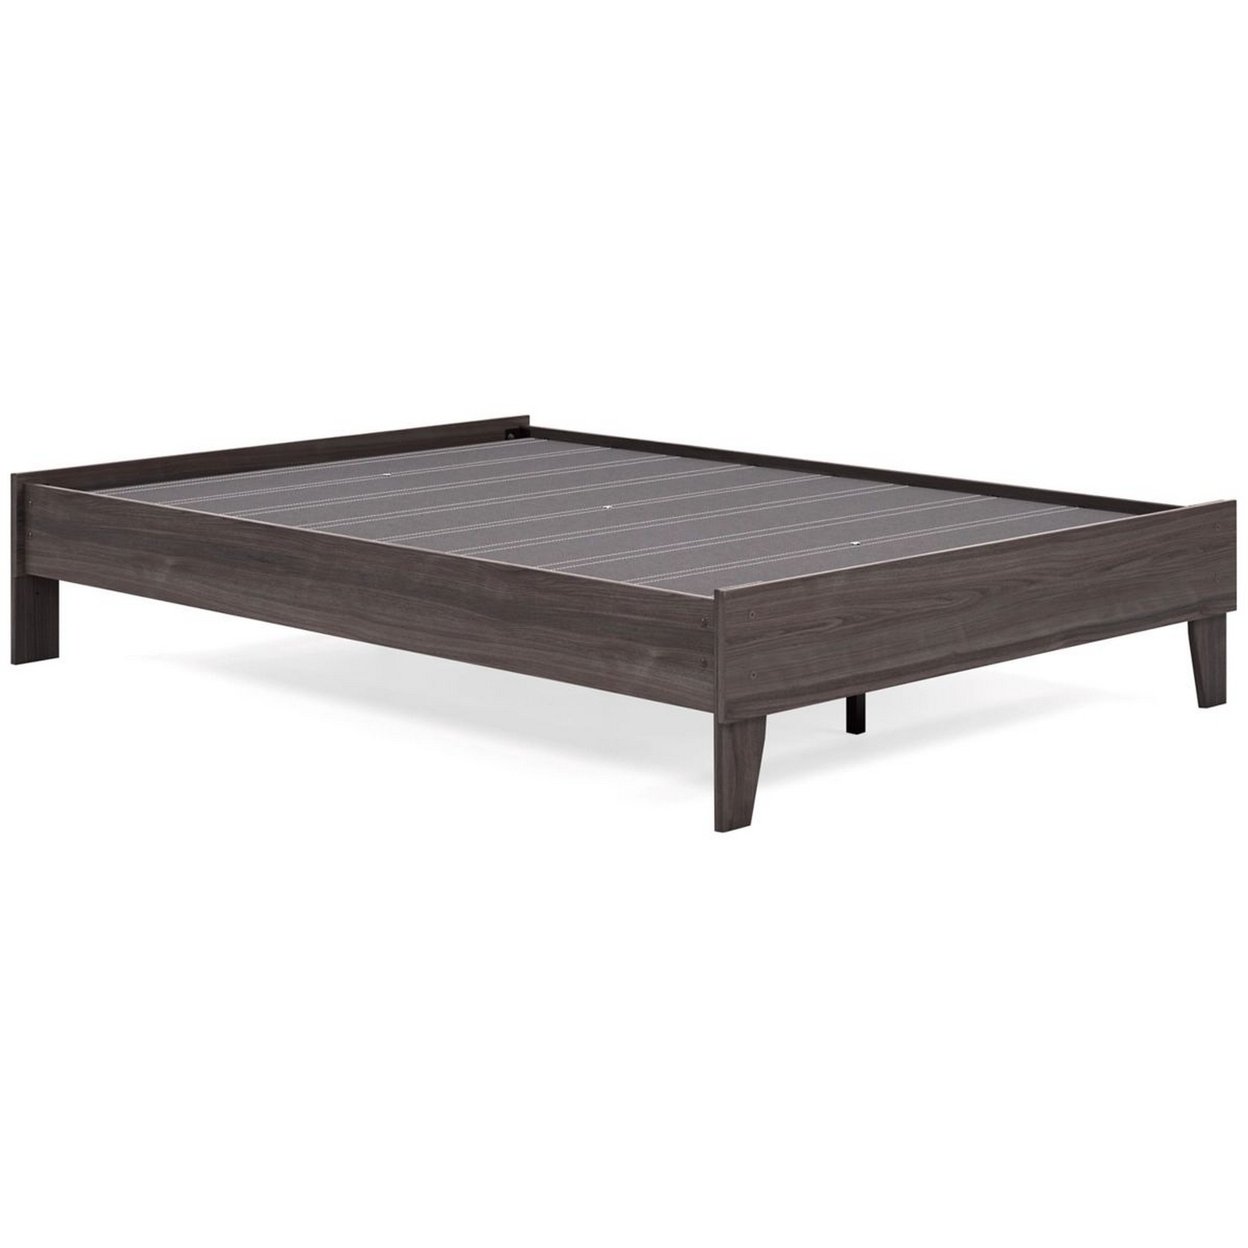 Zof Full Size Platform Bed, Low Profile, Footboard, Rails, Rustic Gray Wood- Saltoro Sherpi